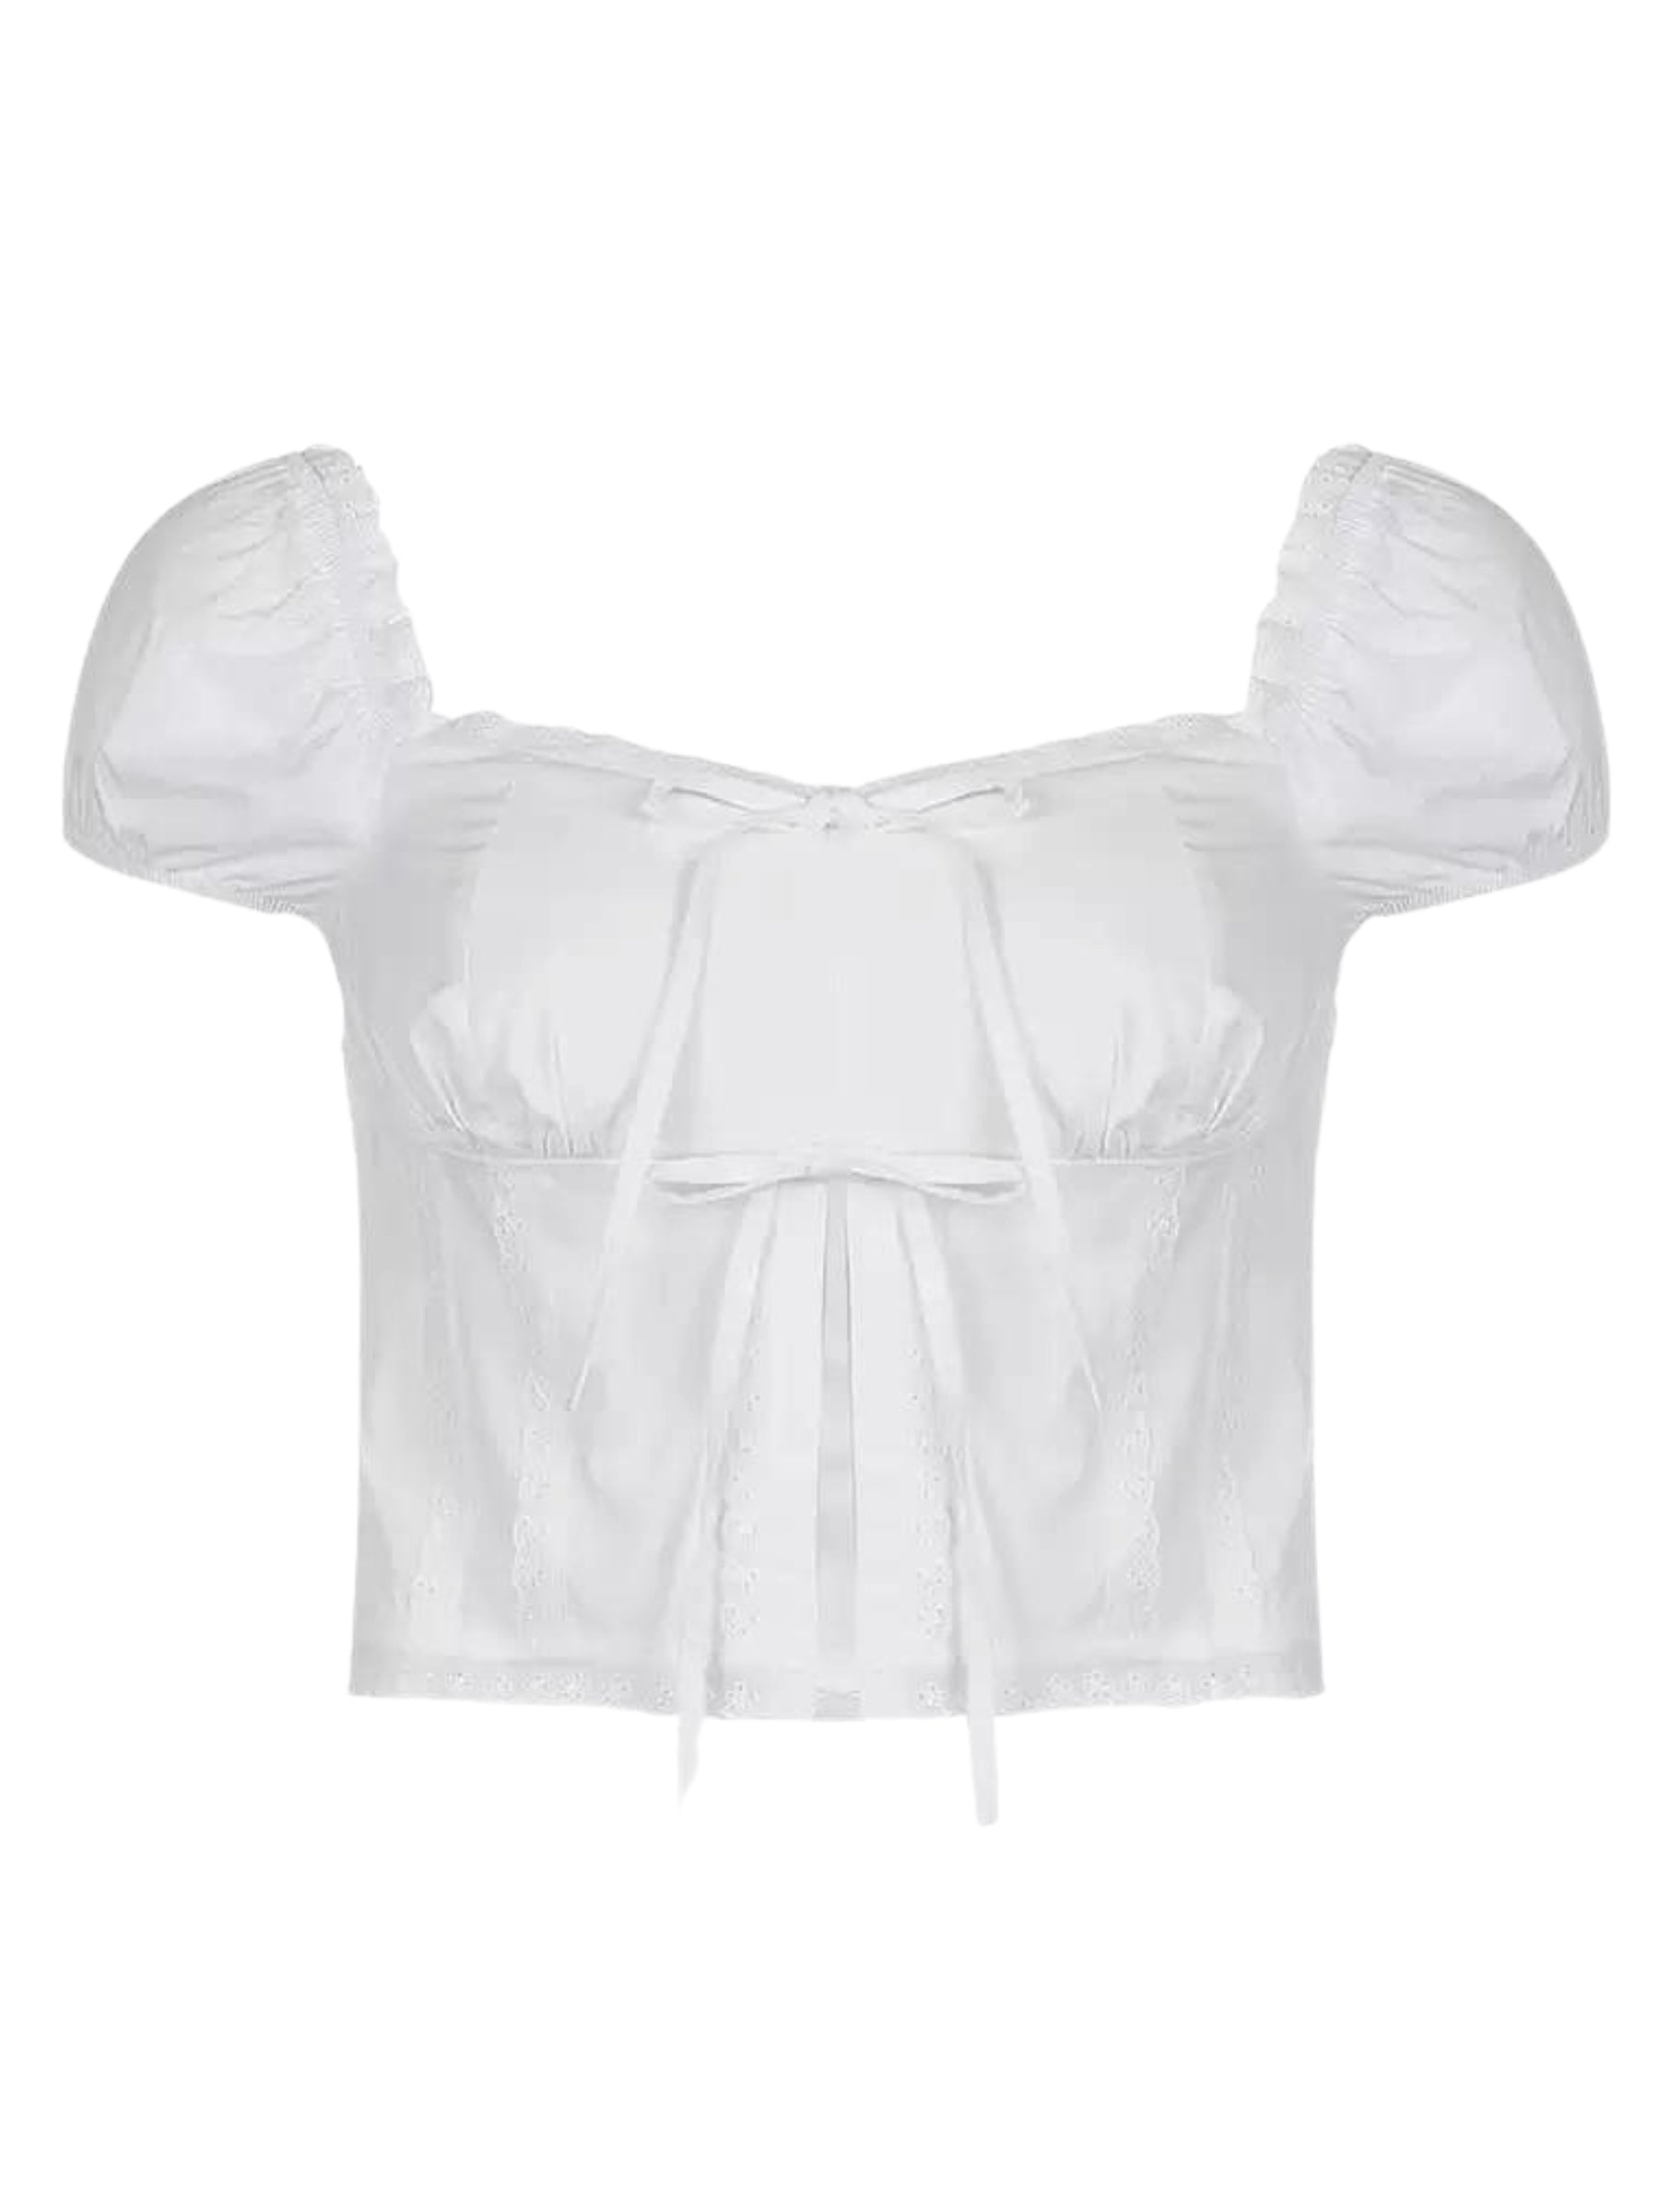 LaPose Fashion - Nethra Short Sleeve Crop Top - Basic Tops, Crop Tops, Off Shoulder Tops, Romantic Tops, Short Sleeve Tops, Summer Clothes, Tops